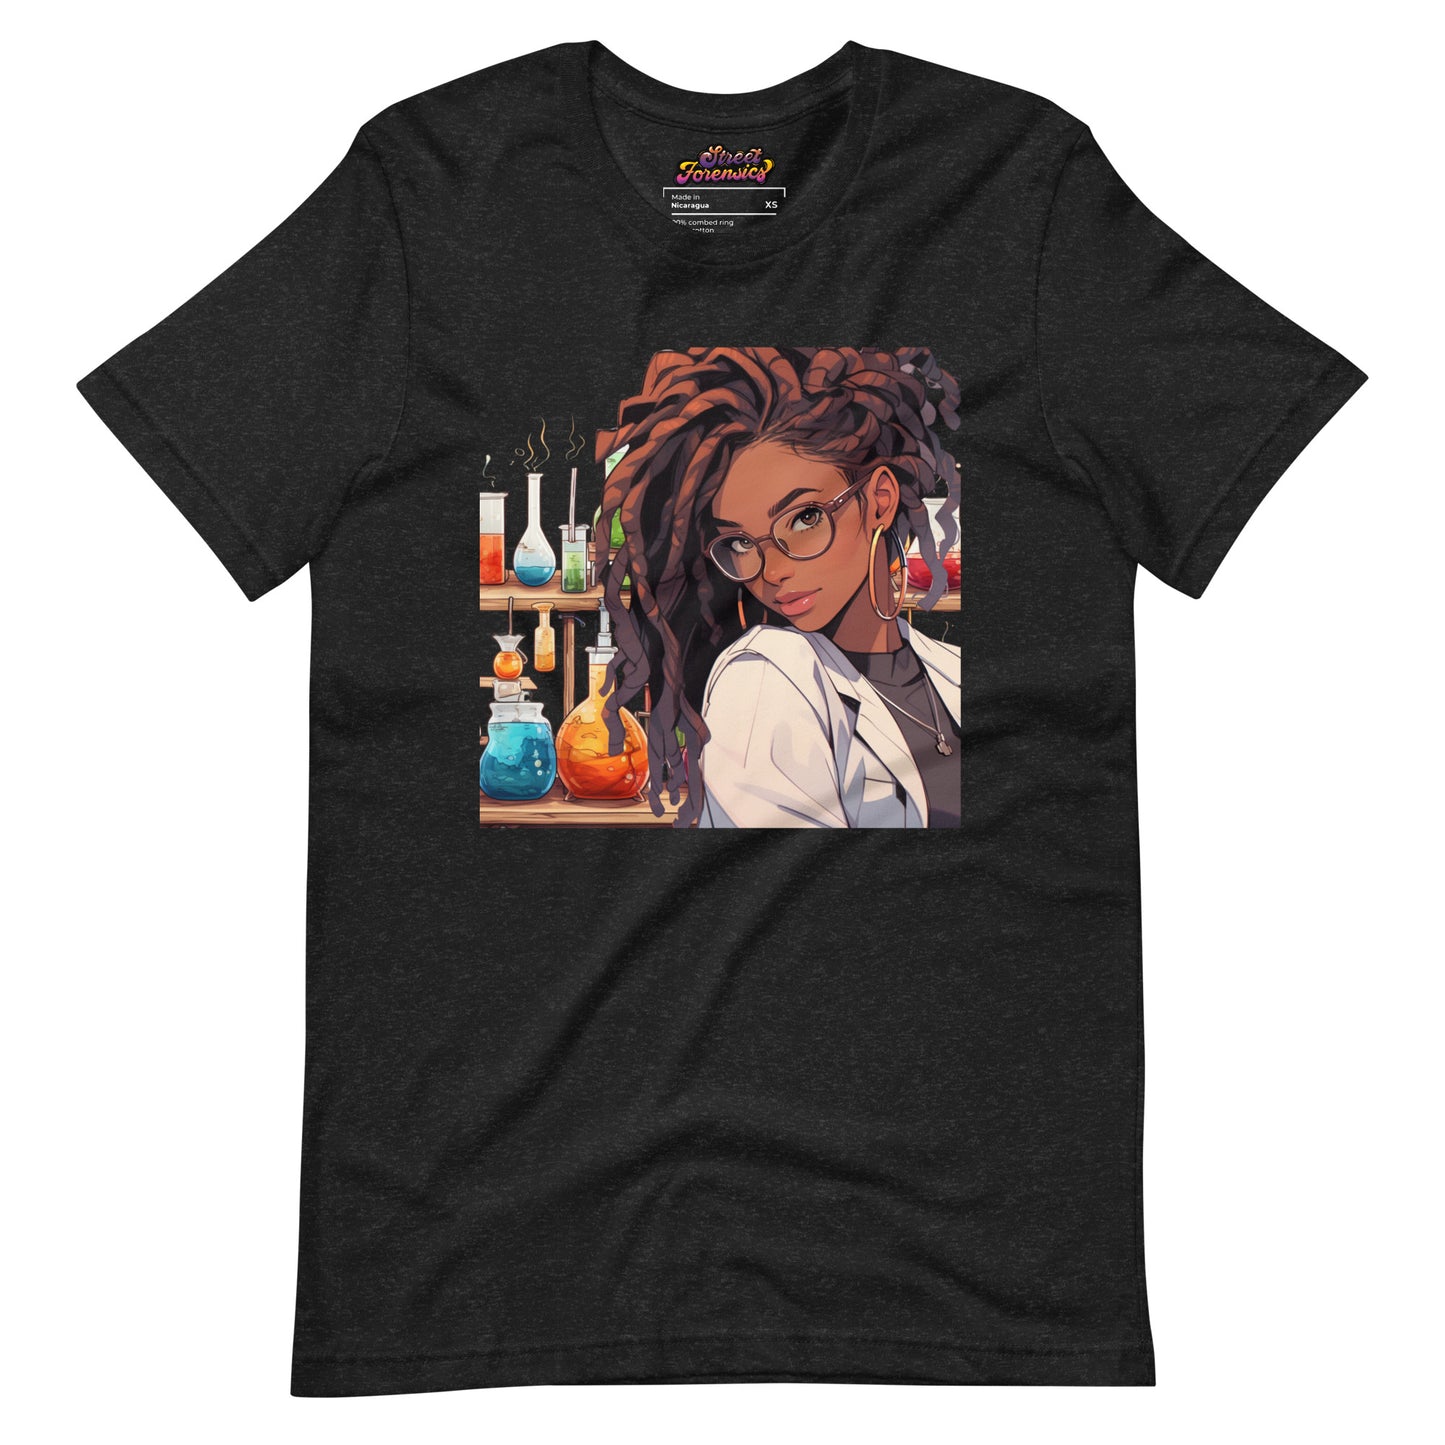 Sista Scientist Unisex t-shirt